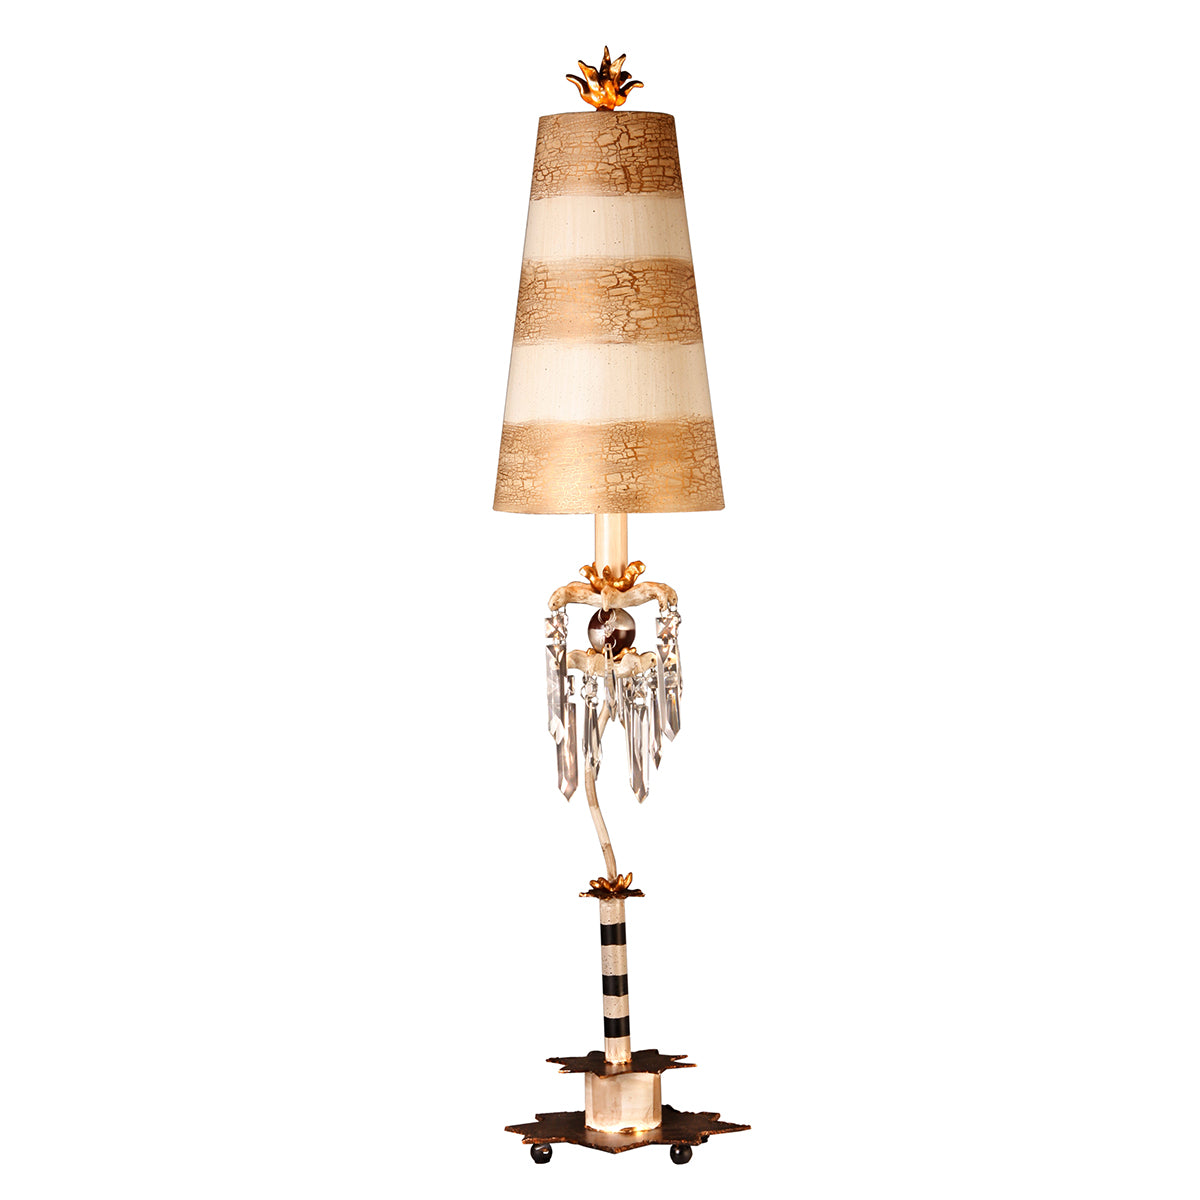 Birdland Table Lamp